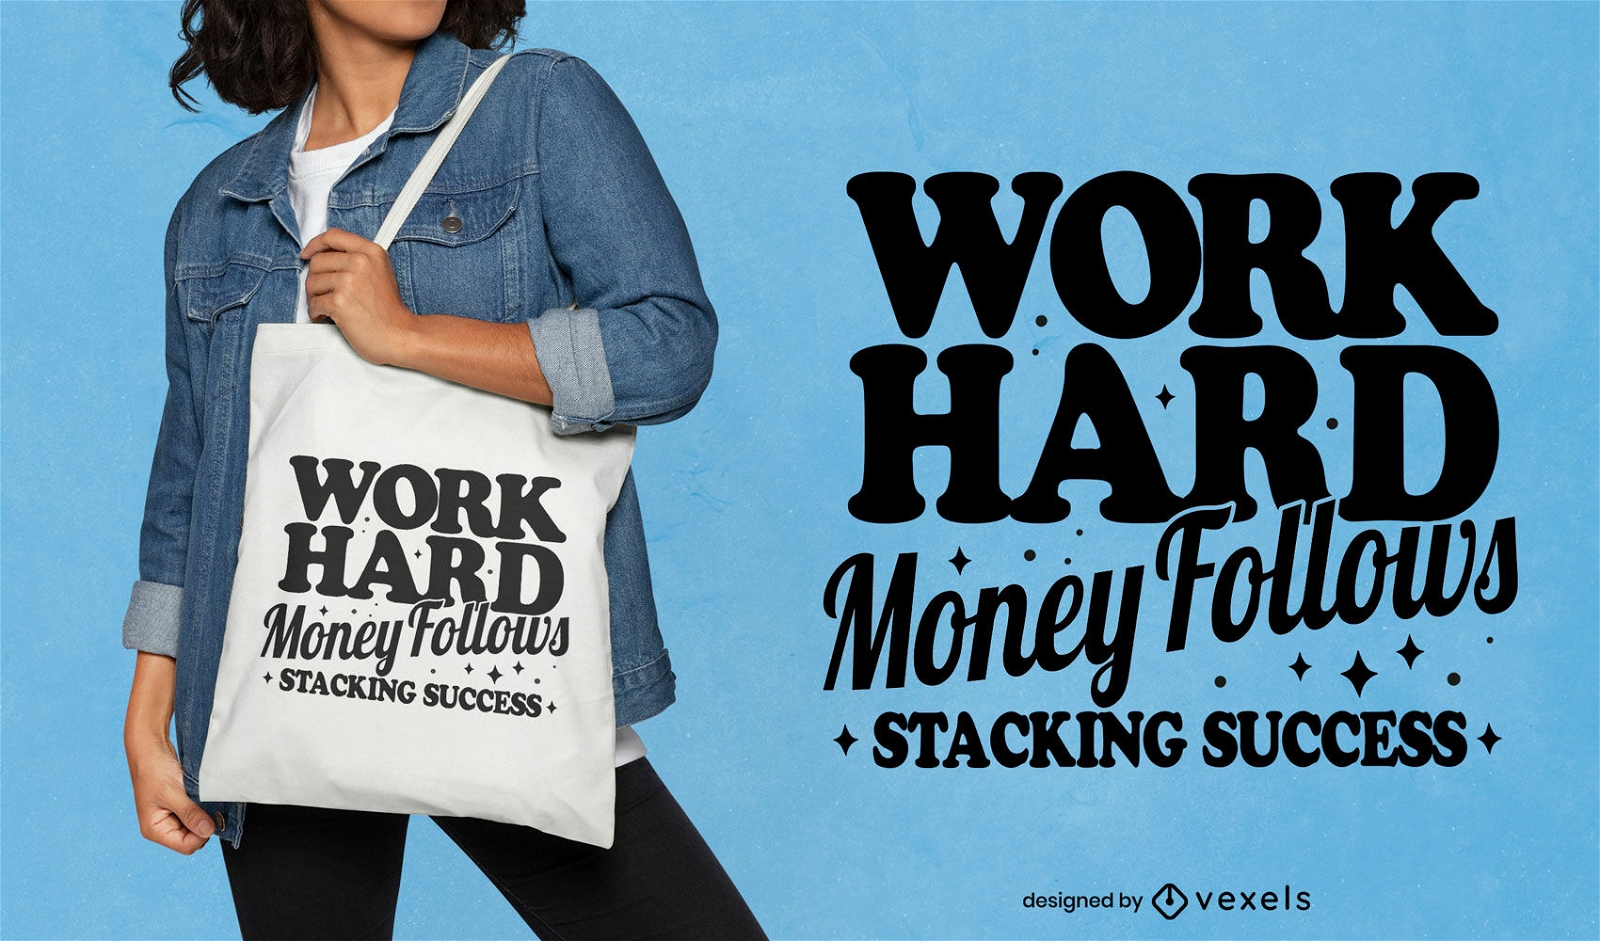 Work hard money follows tote bag design